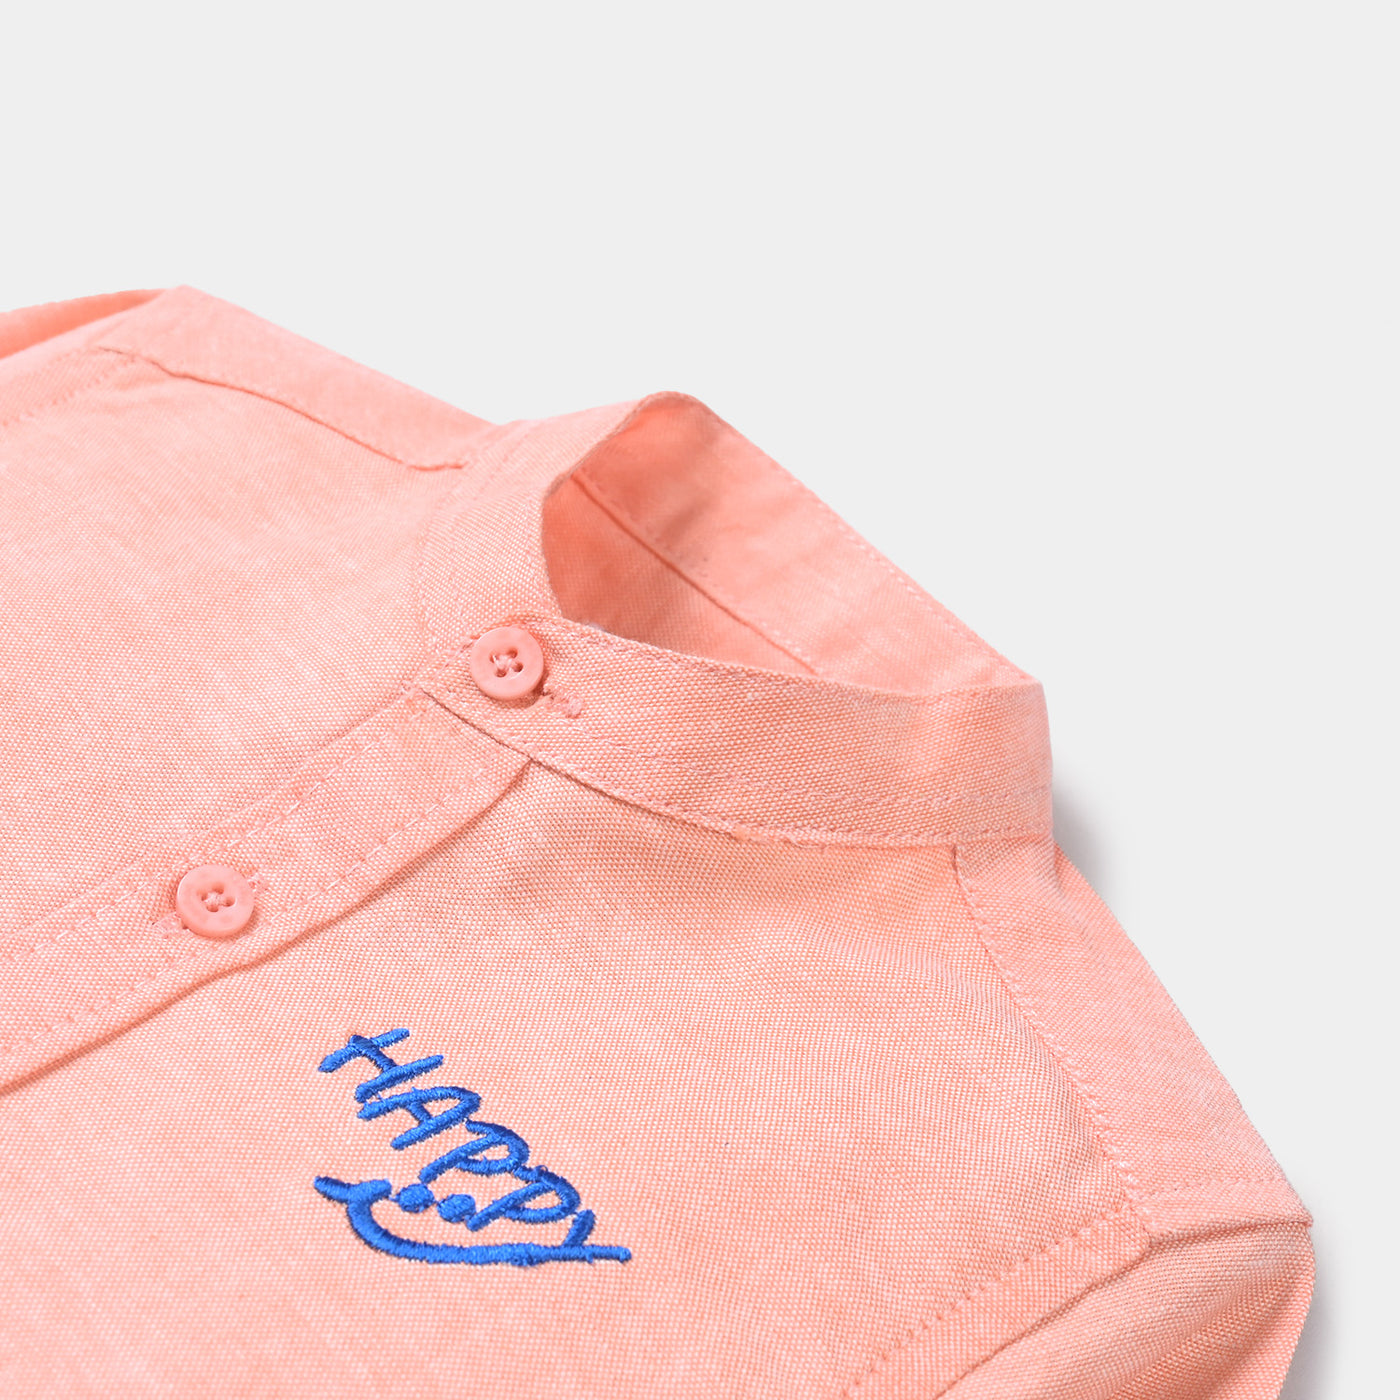 Infant Oxford Boys Casual Shirt Happy-Peach